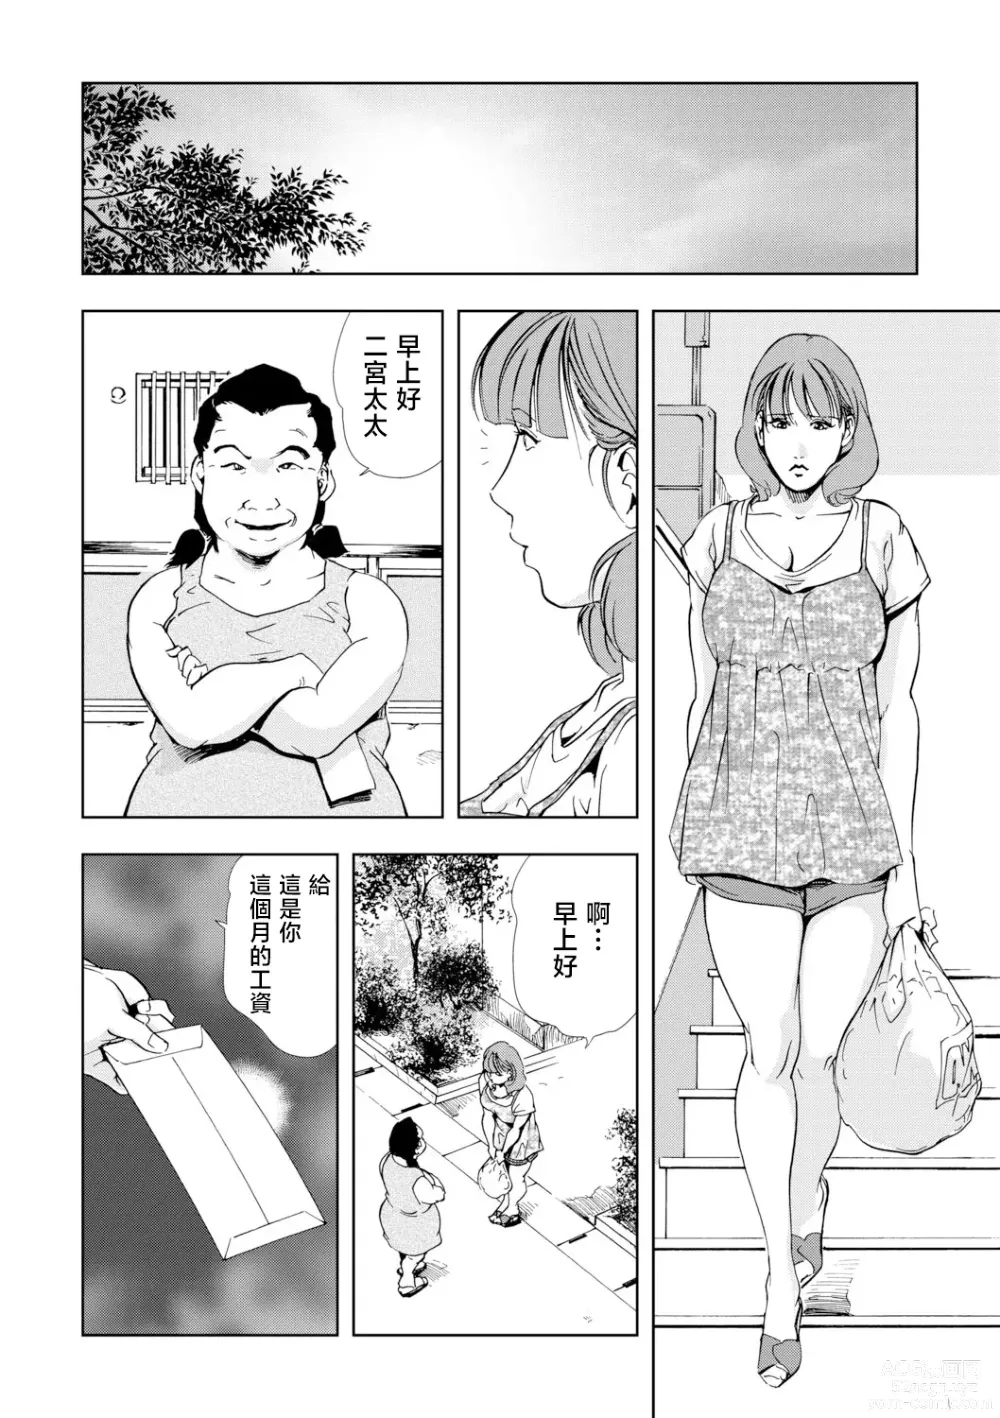 Page 6 of manga Netorare Vol.03